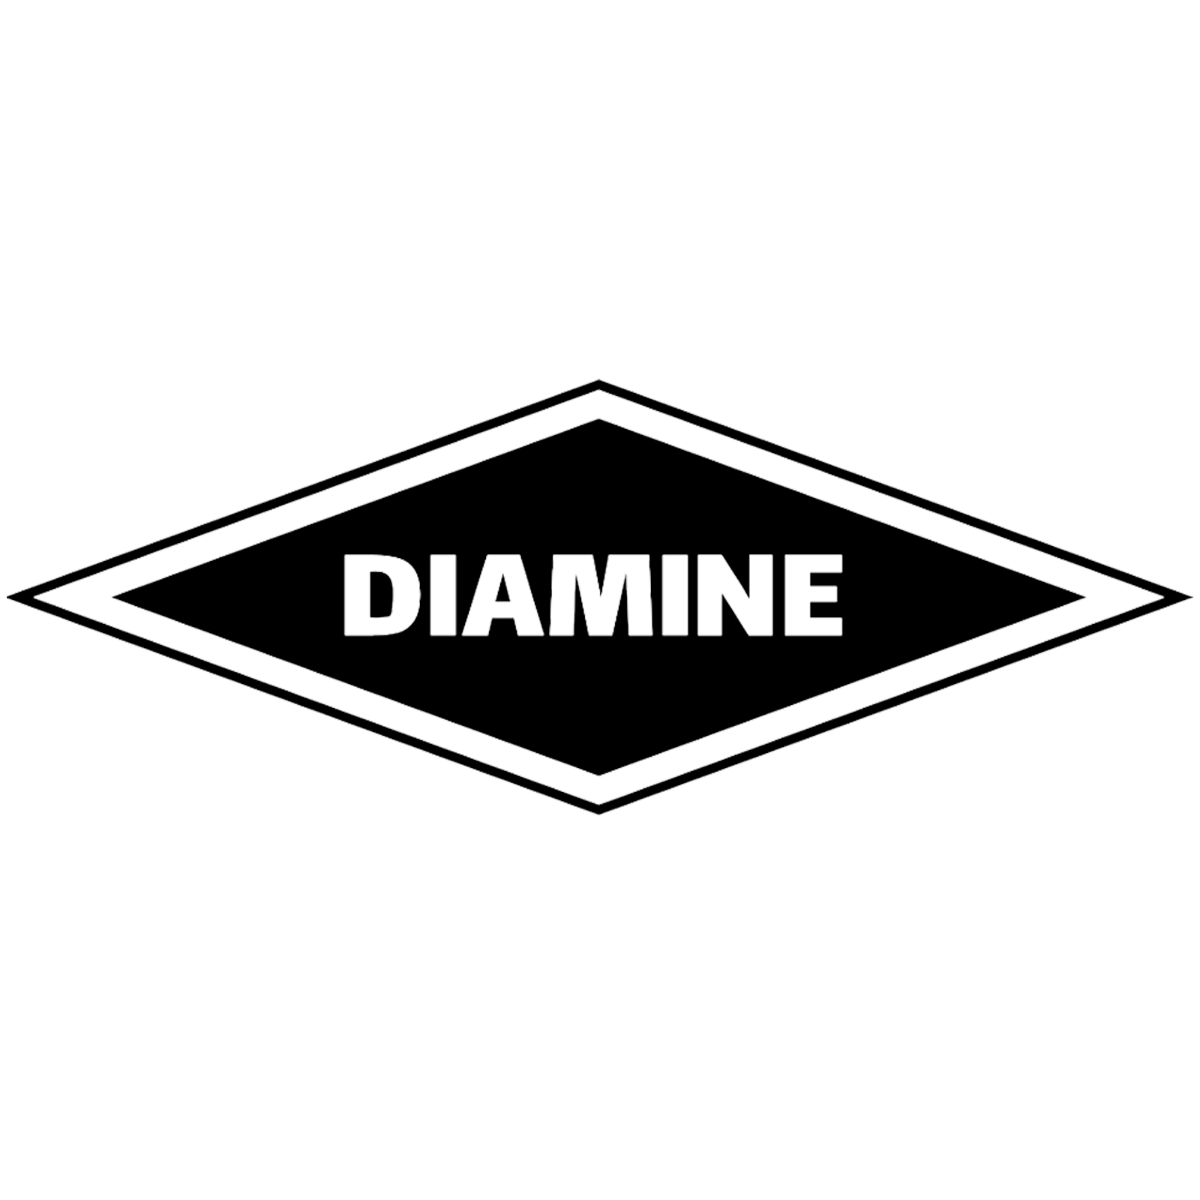 Diamine_Logo